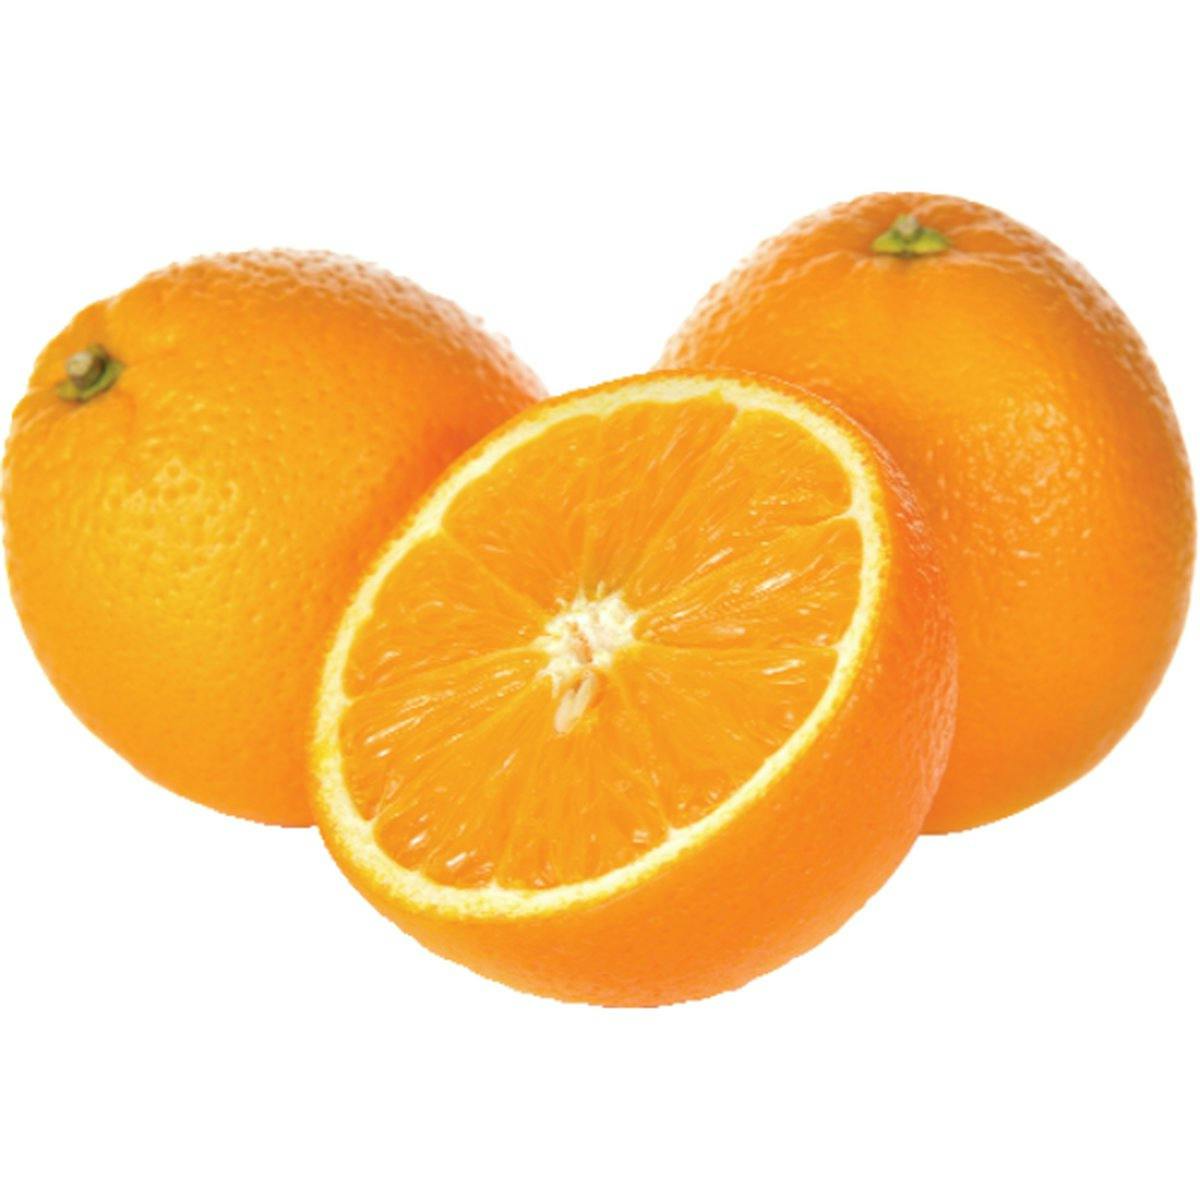 orange juice (freshly squeezed) 